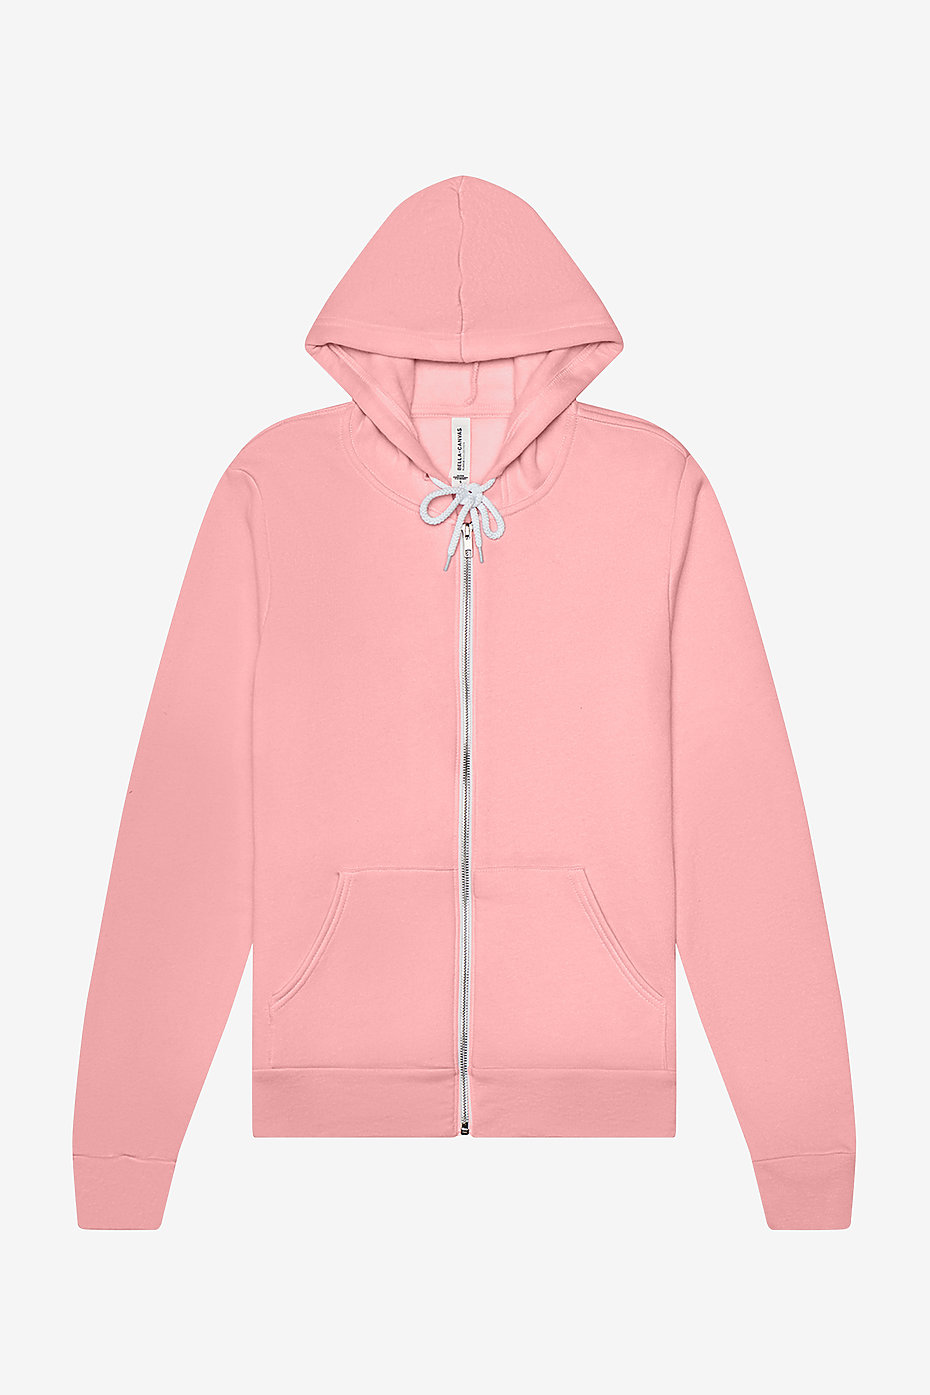 Ultra Game Women's Standard Full Zip Hoodie Sweatshirt Dime Jacket :  : Fashion